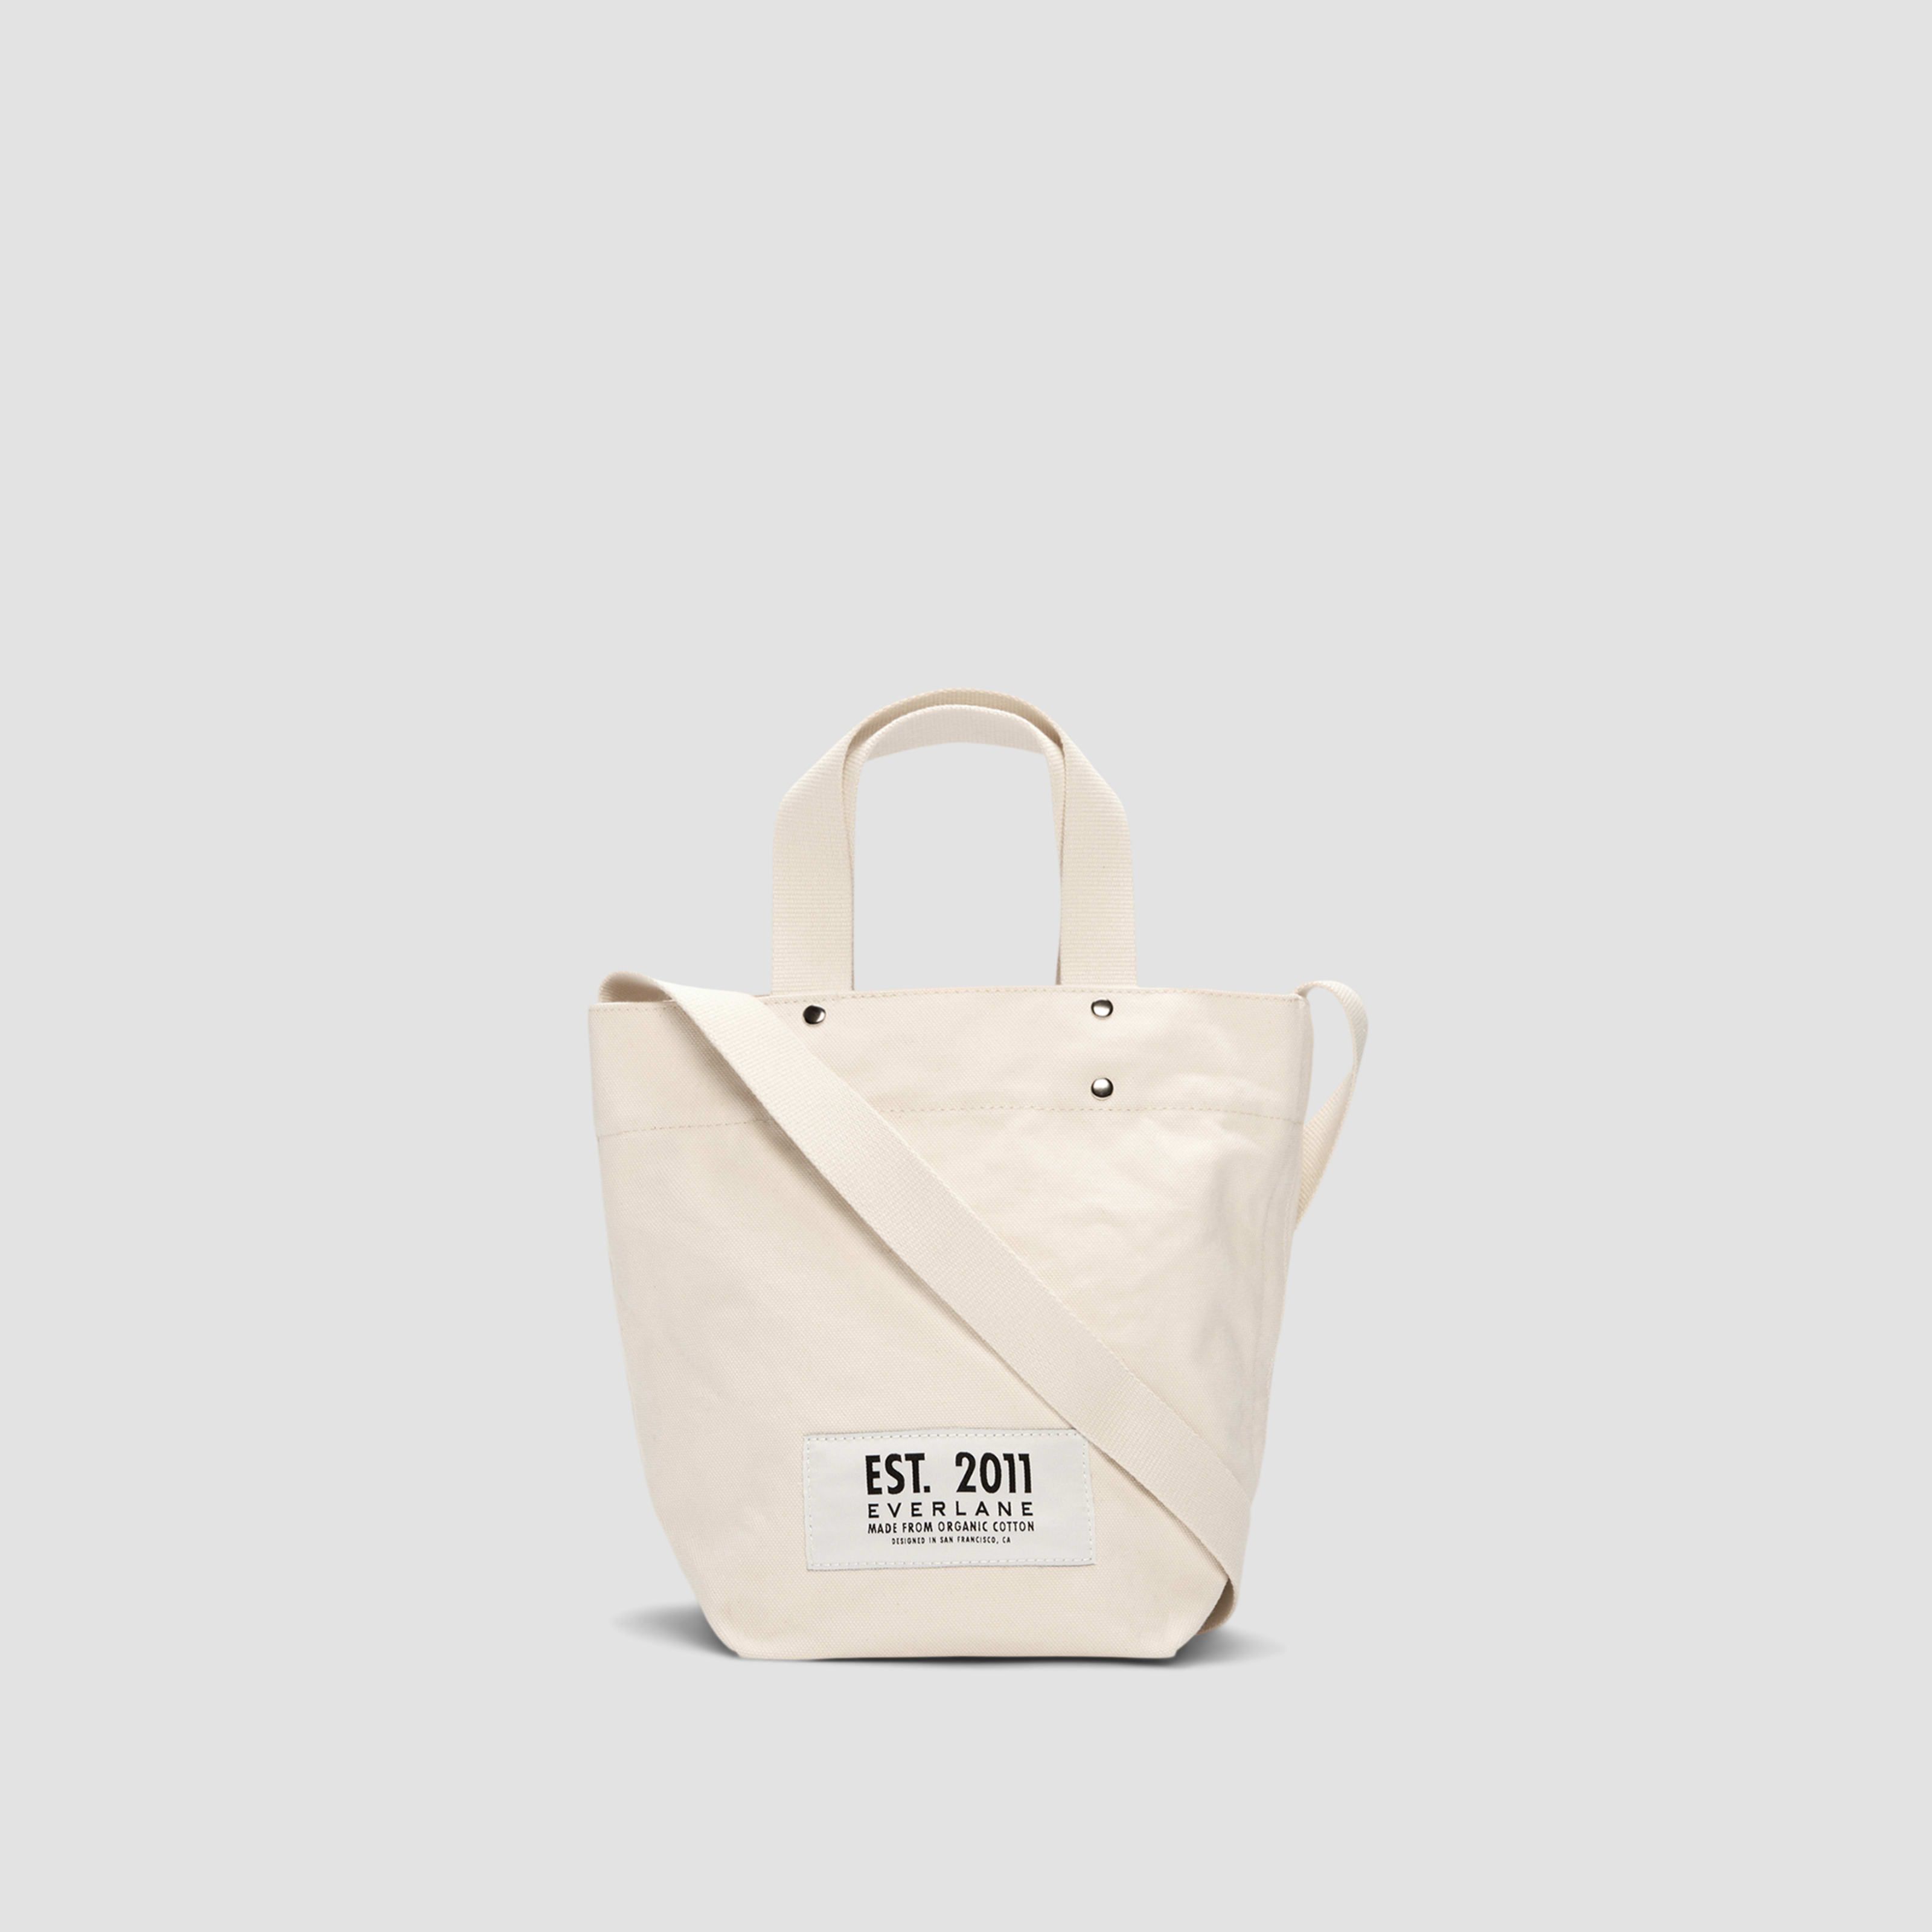 Organic Canvas Mini Tote Bag by Everlane in Natural | Everlane